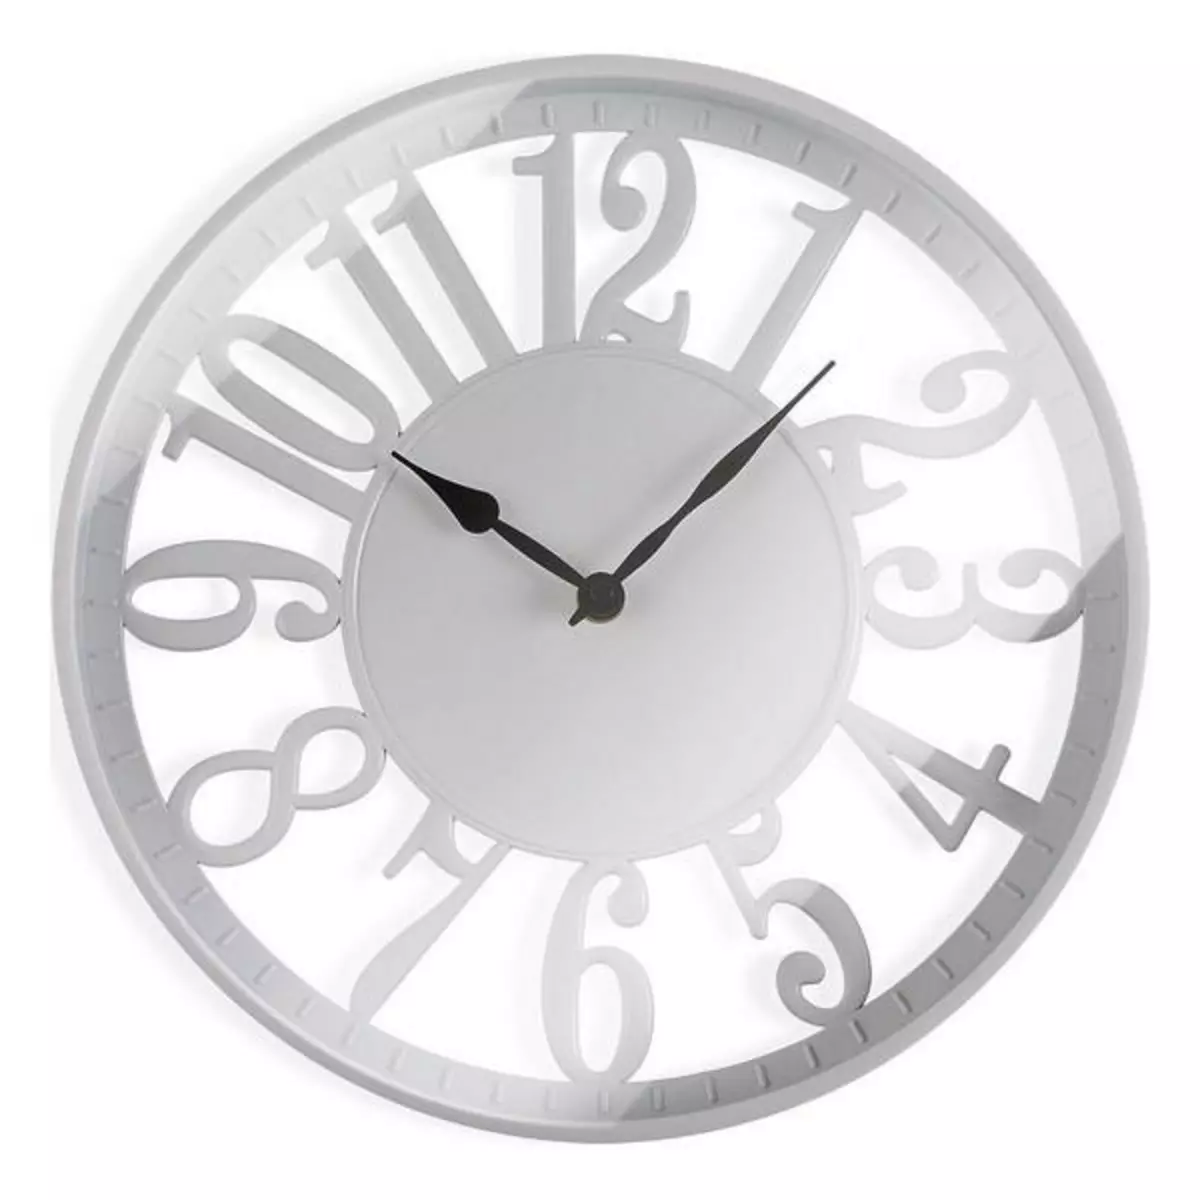 MARKET24 Horloge Murale (Ø 30 cm) Plastique (4,5 x 30 x 30 cm)